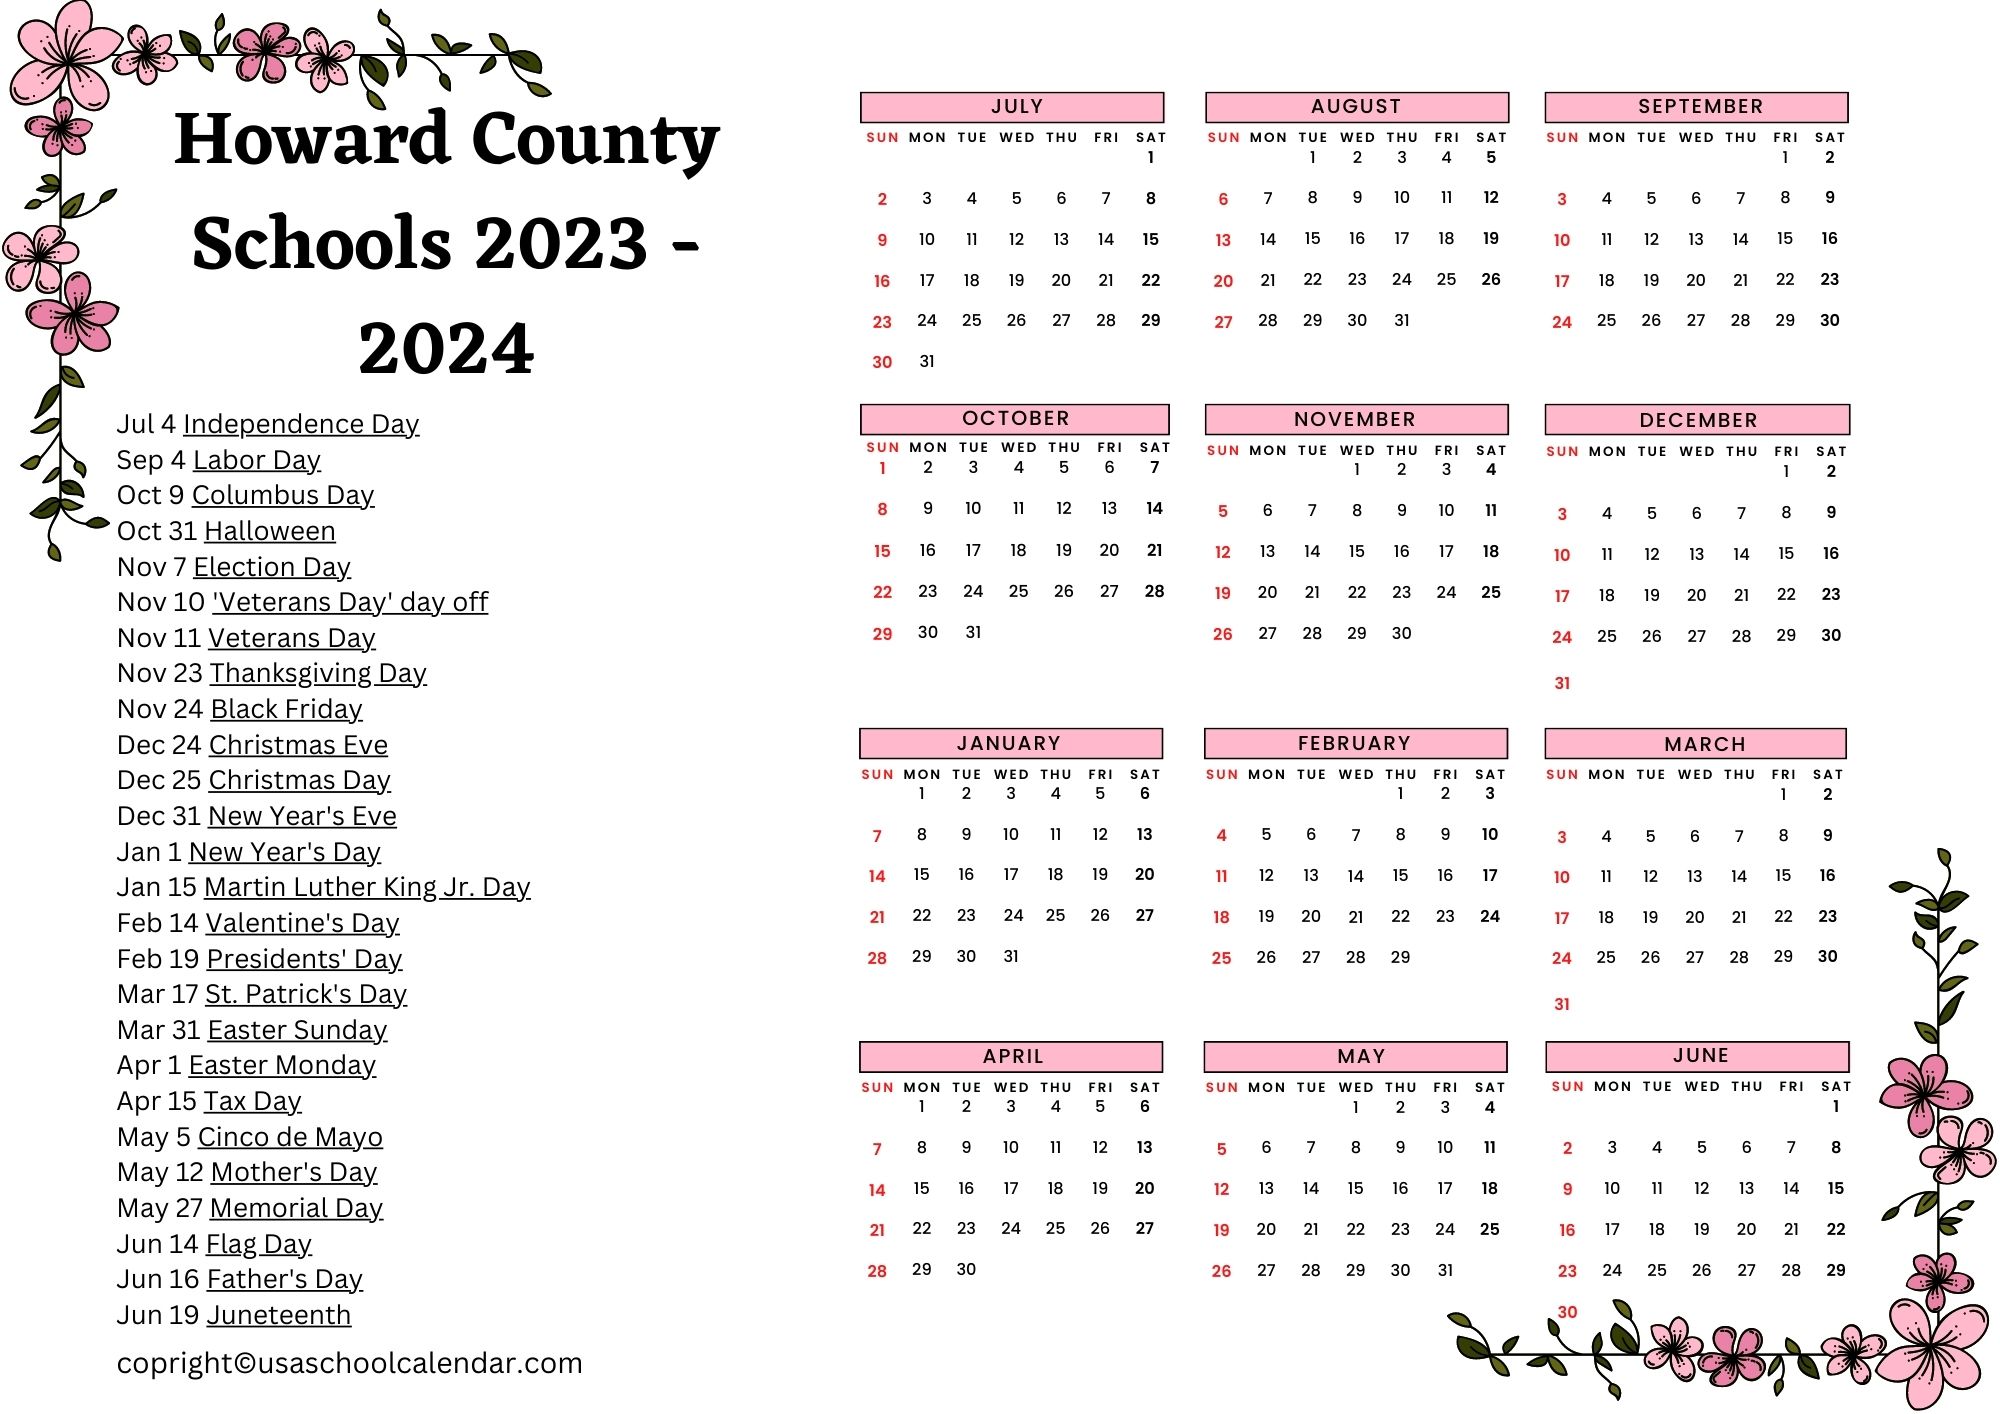 Howard County Schools Calendar Holidays 20232024